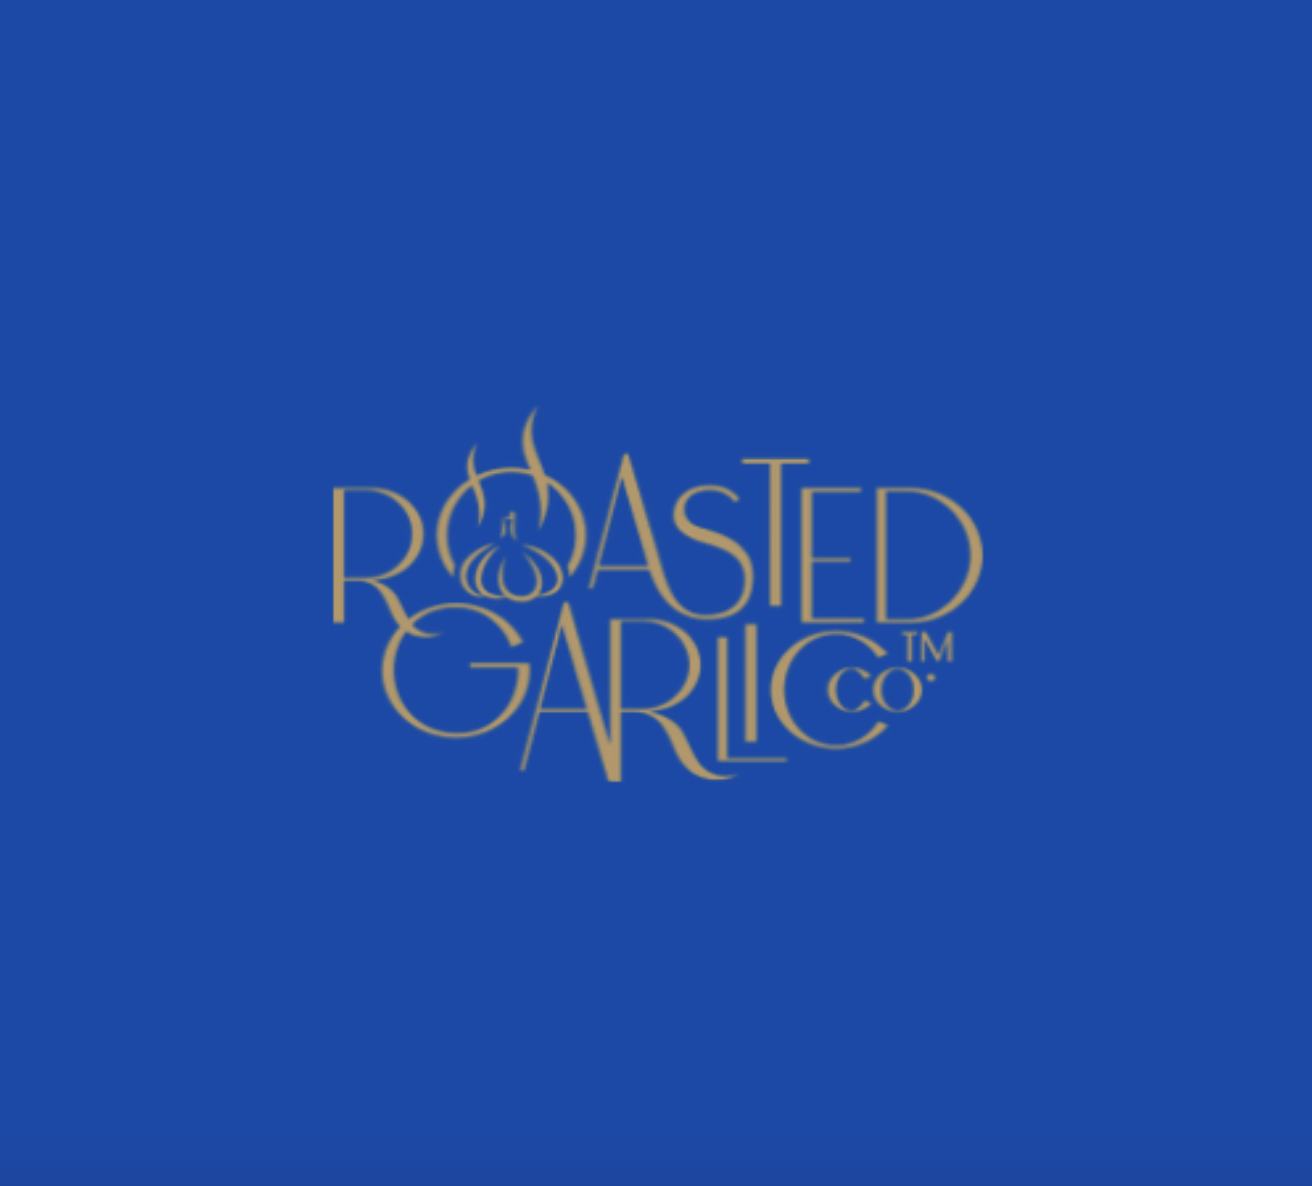 Roasted Garlic Catering Logo